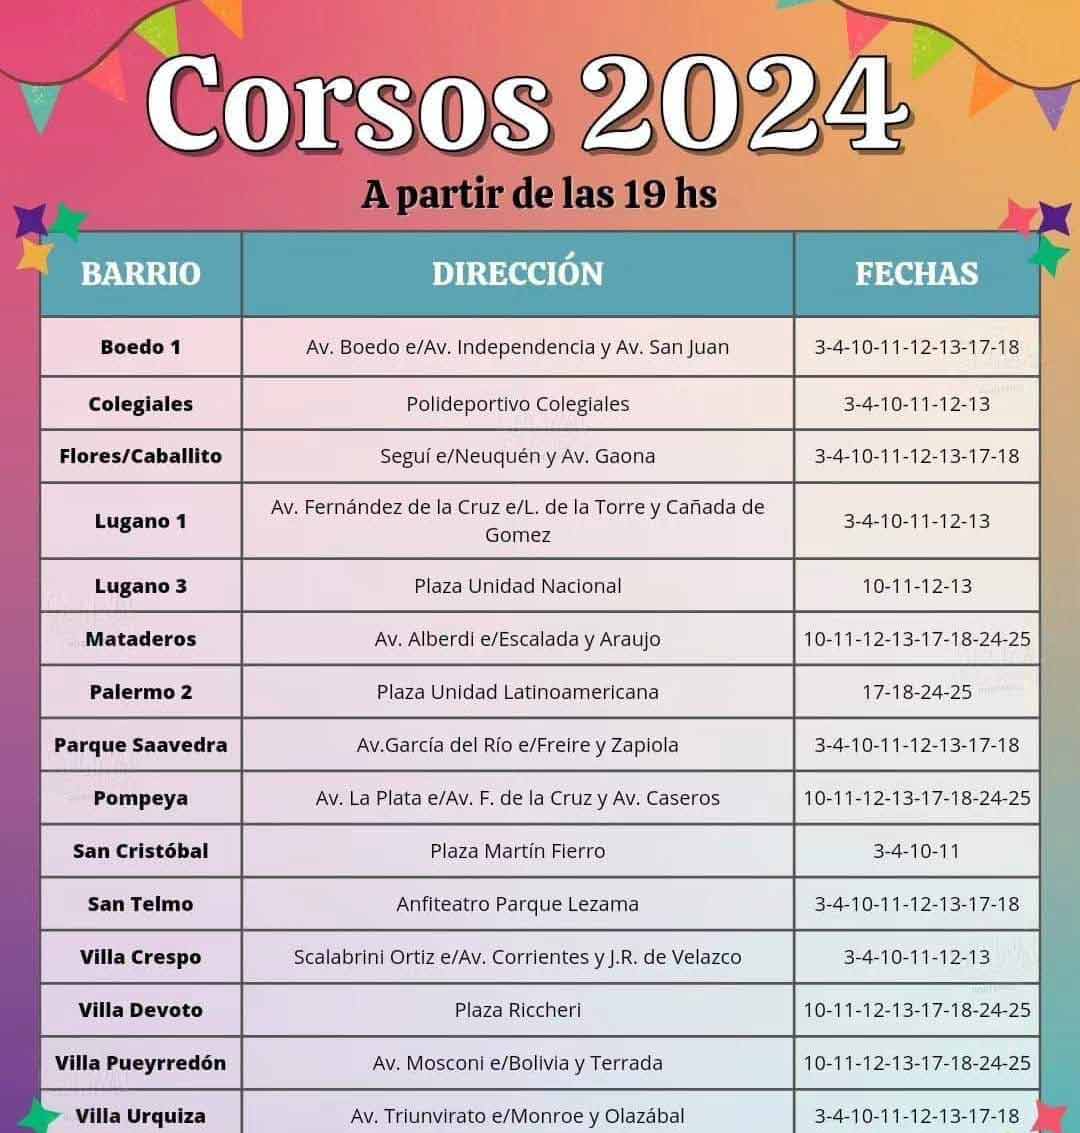 Carnival Buenos Aires 2024 parades 